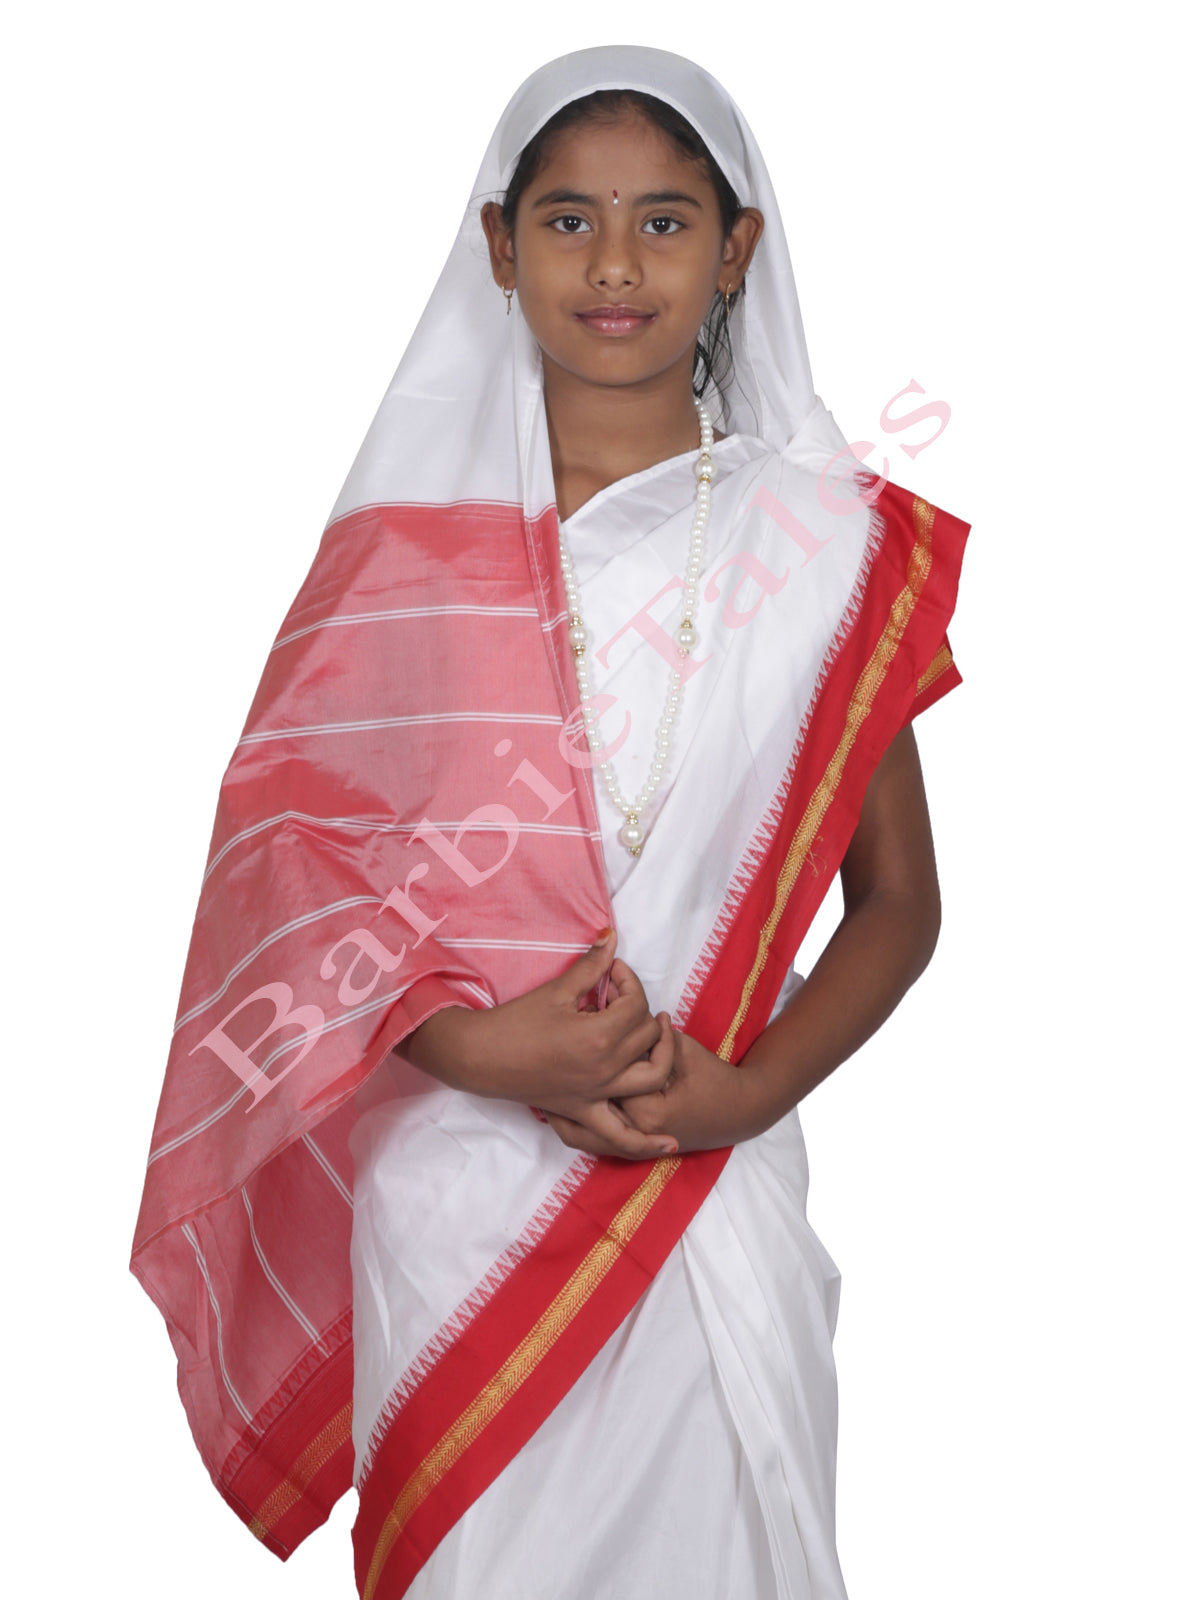 Mahatma gandhi fancy dress compitition ideas Gandhi jeyanthi J.A.K. pownika  kerani's birthday october 2 Think os | Baby face, Mahatma gandhi, Birthday